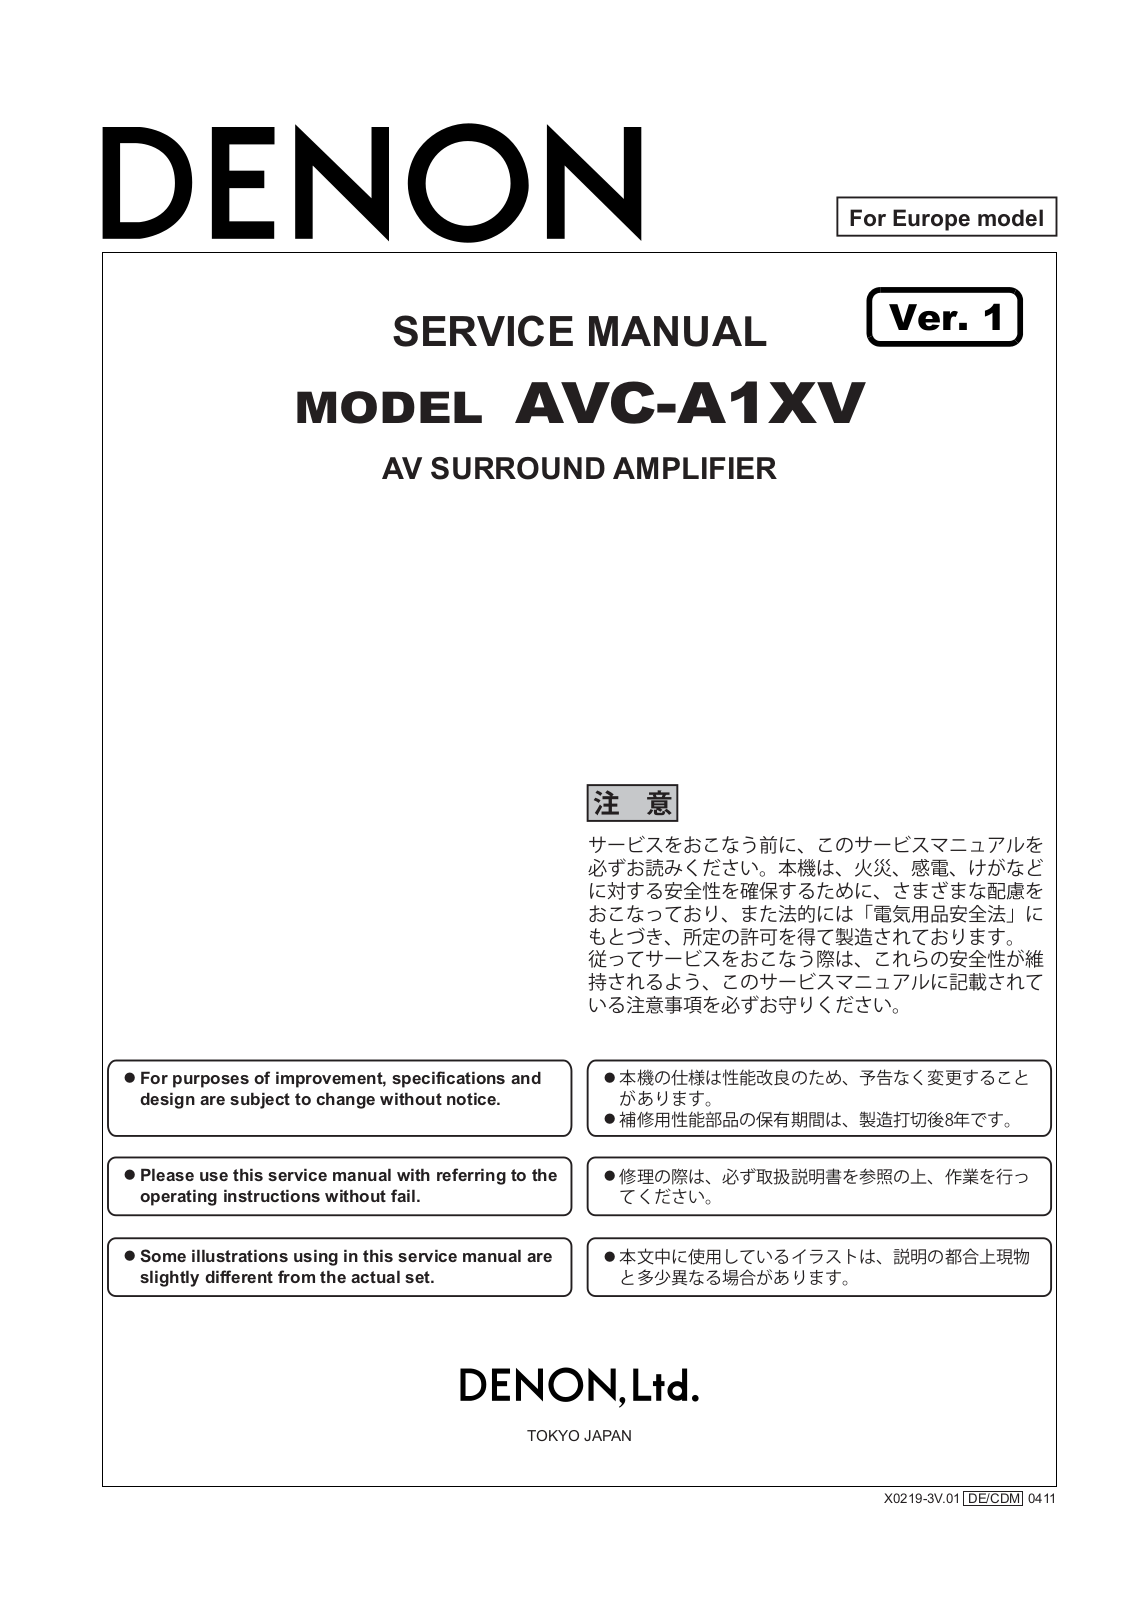 Denon AVC-A1XV Service Manual